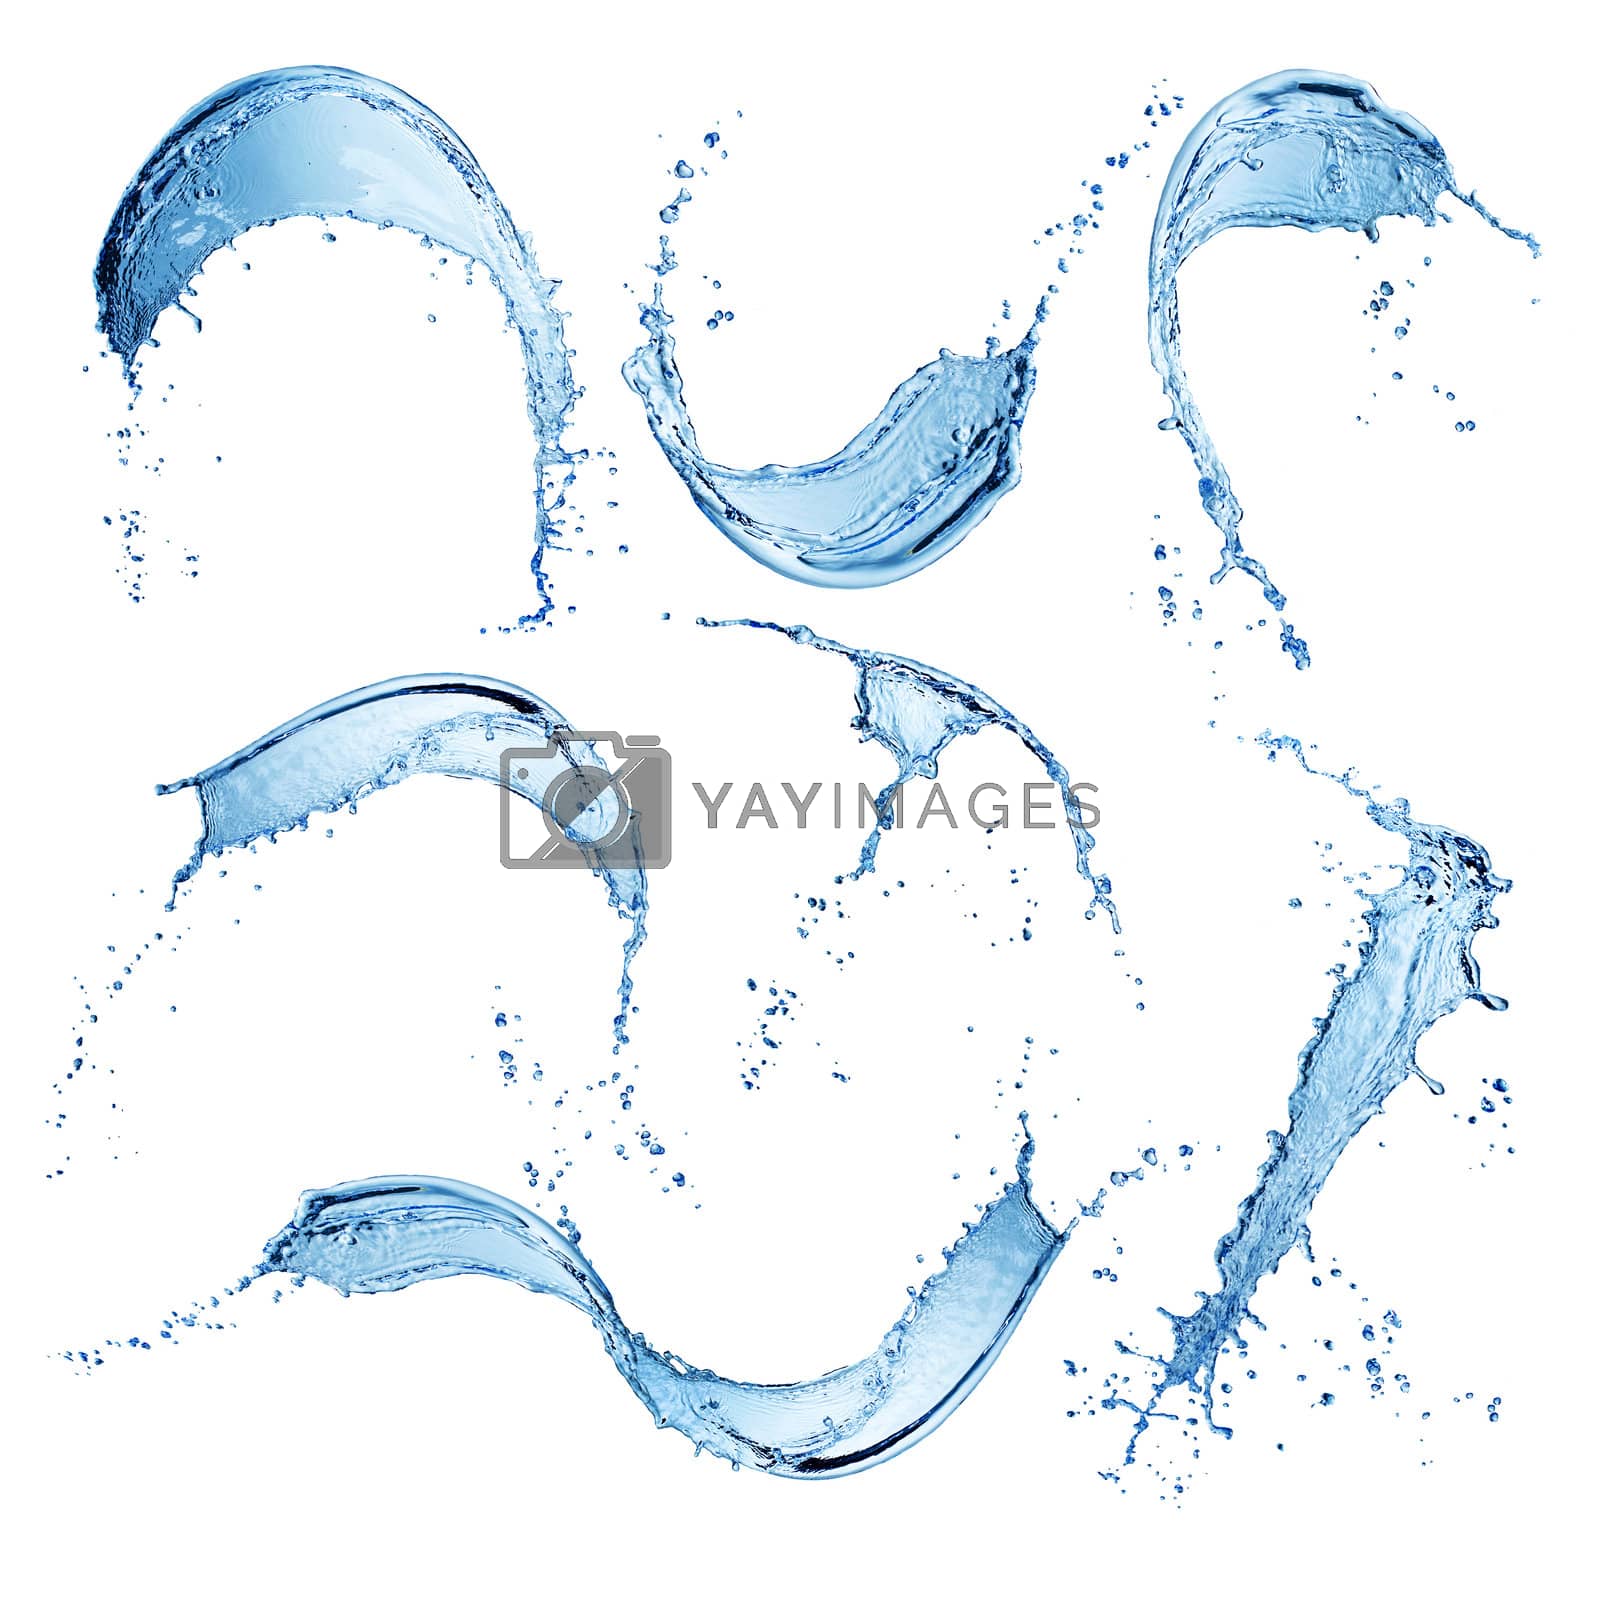 Royalty free image of Water Splash set by SubbotinaA